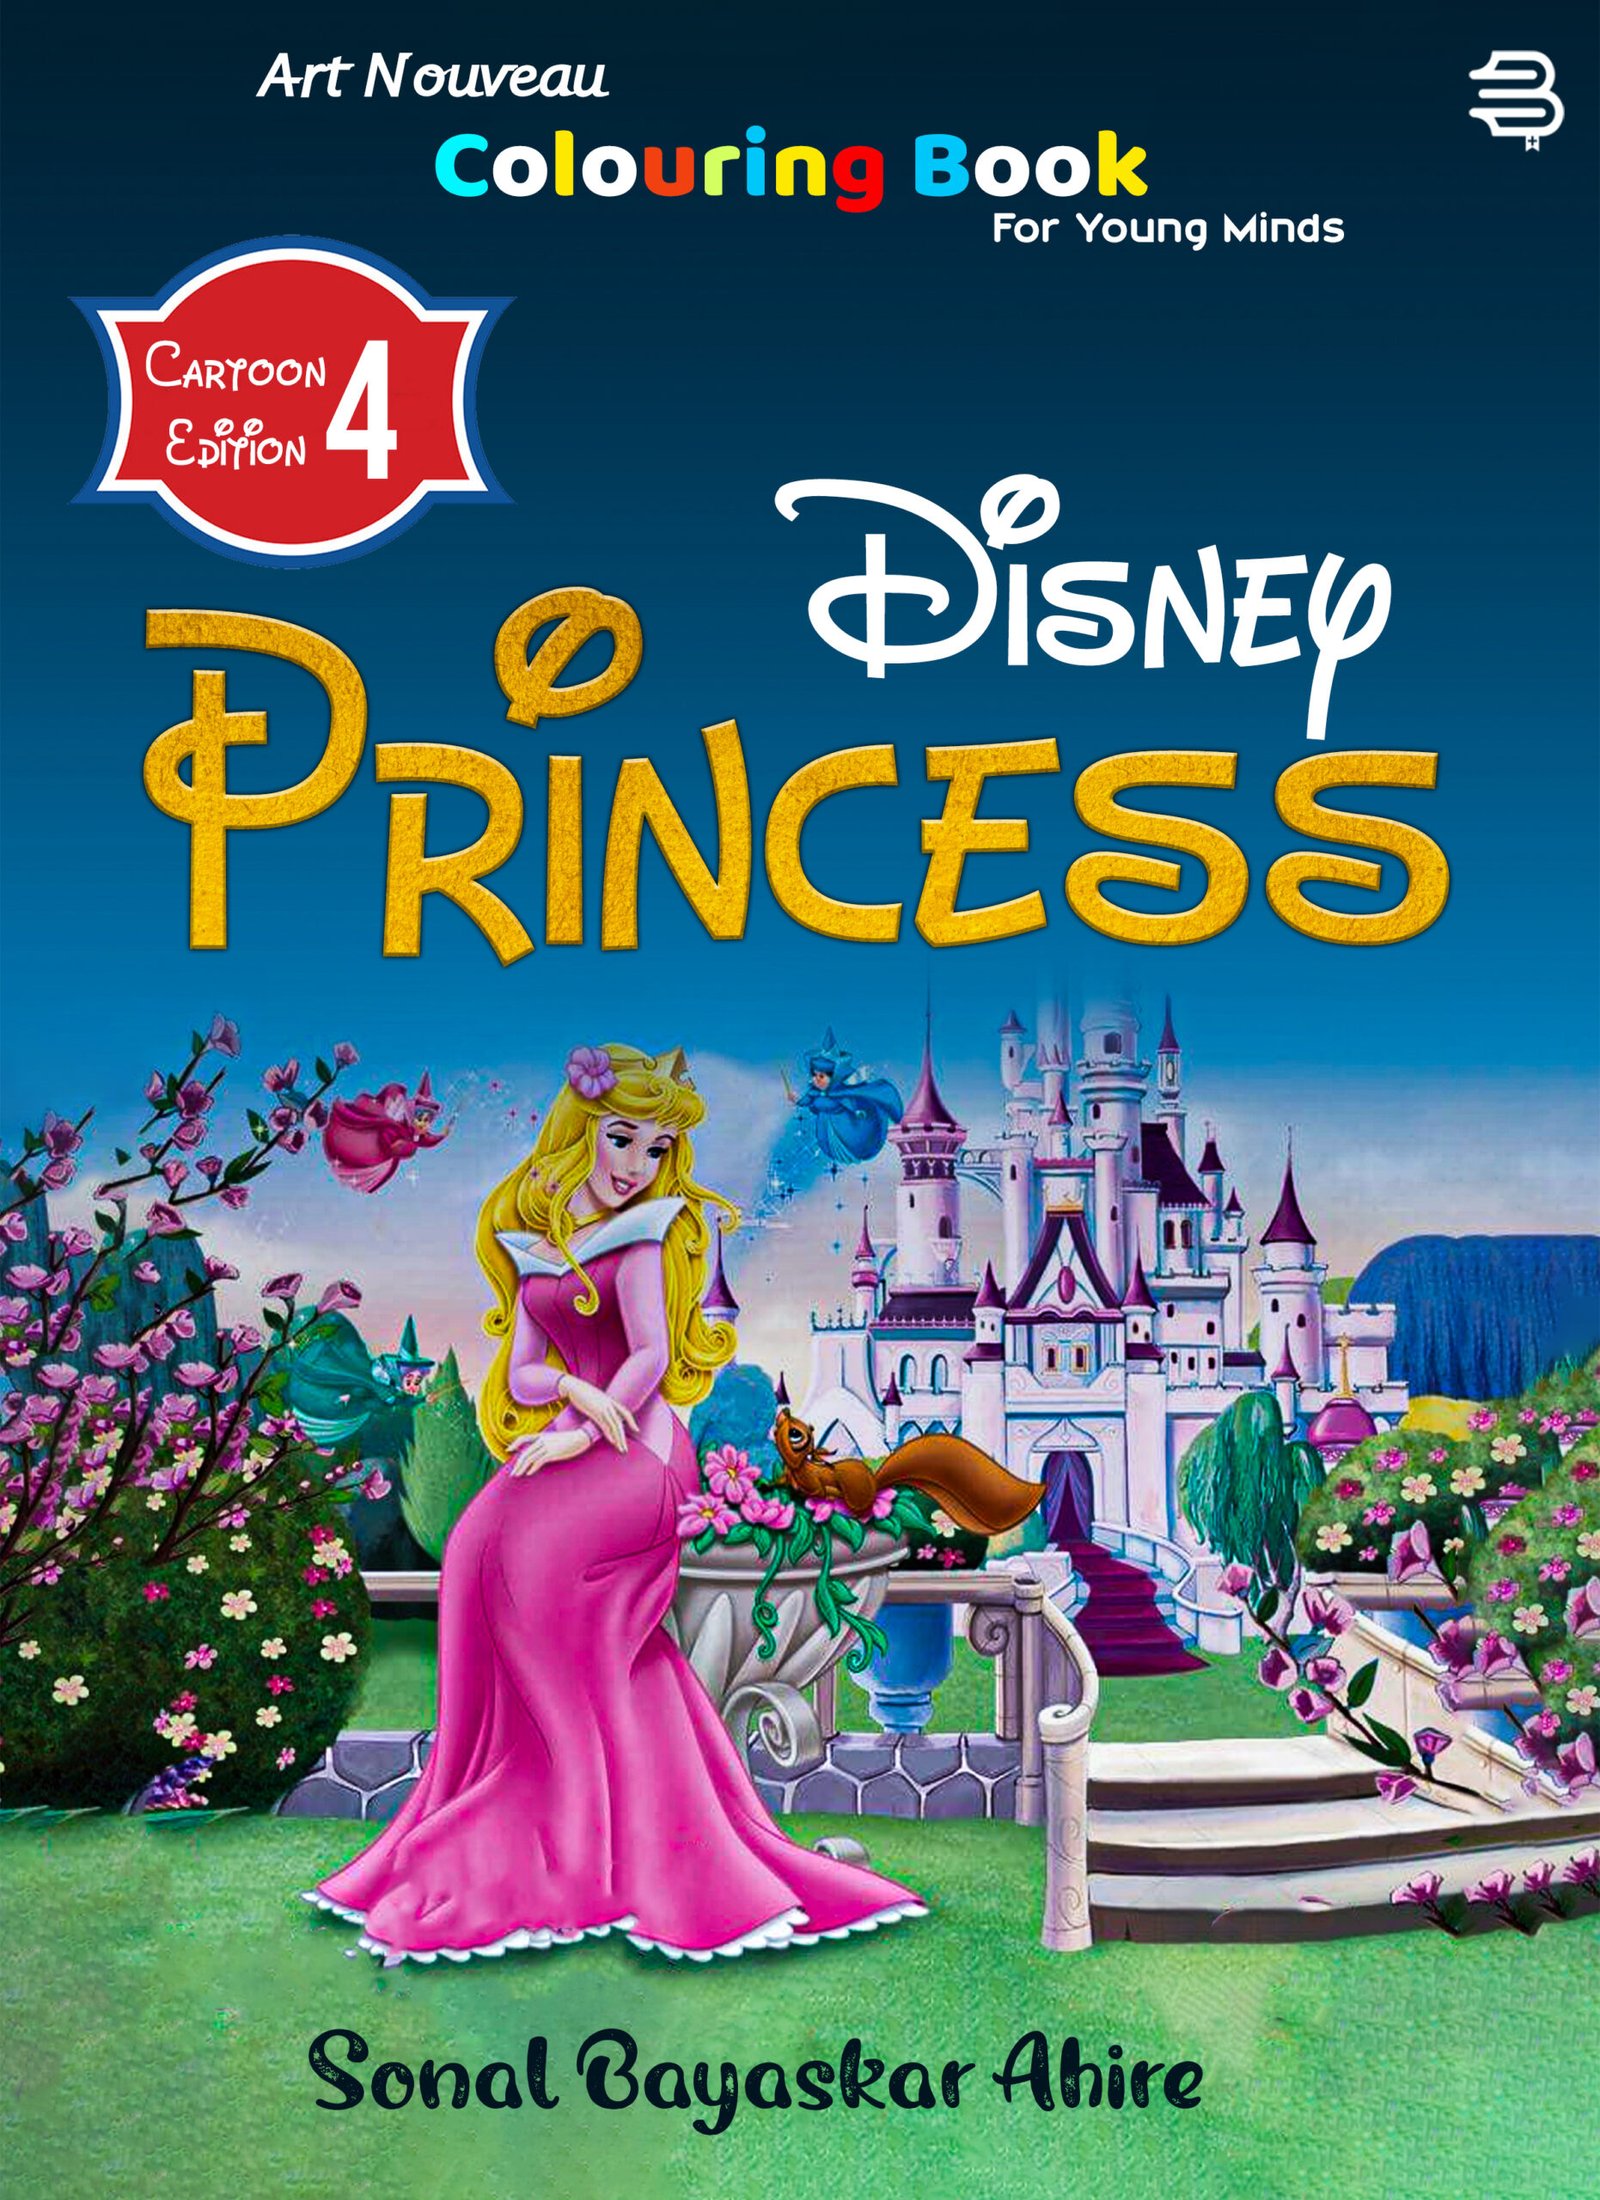 Art Nouveau Colouring Book For Young Minds Cartoon Editiion-4 Disney Princess BY (Sonal Bayaskar Ahire, Gayatri Bayaskar)